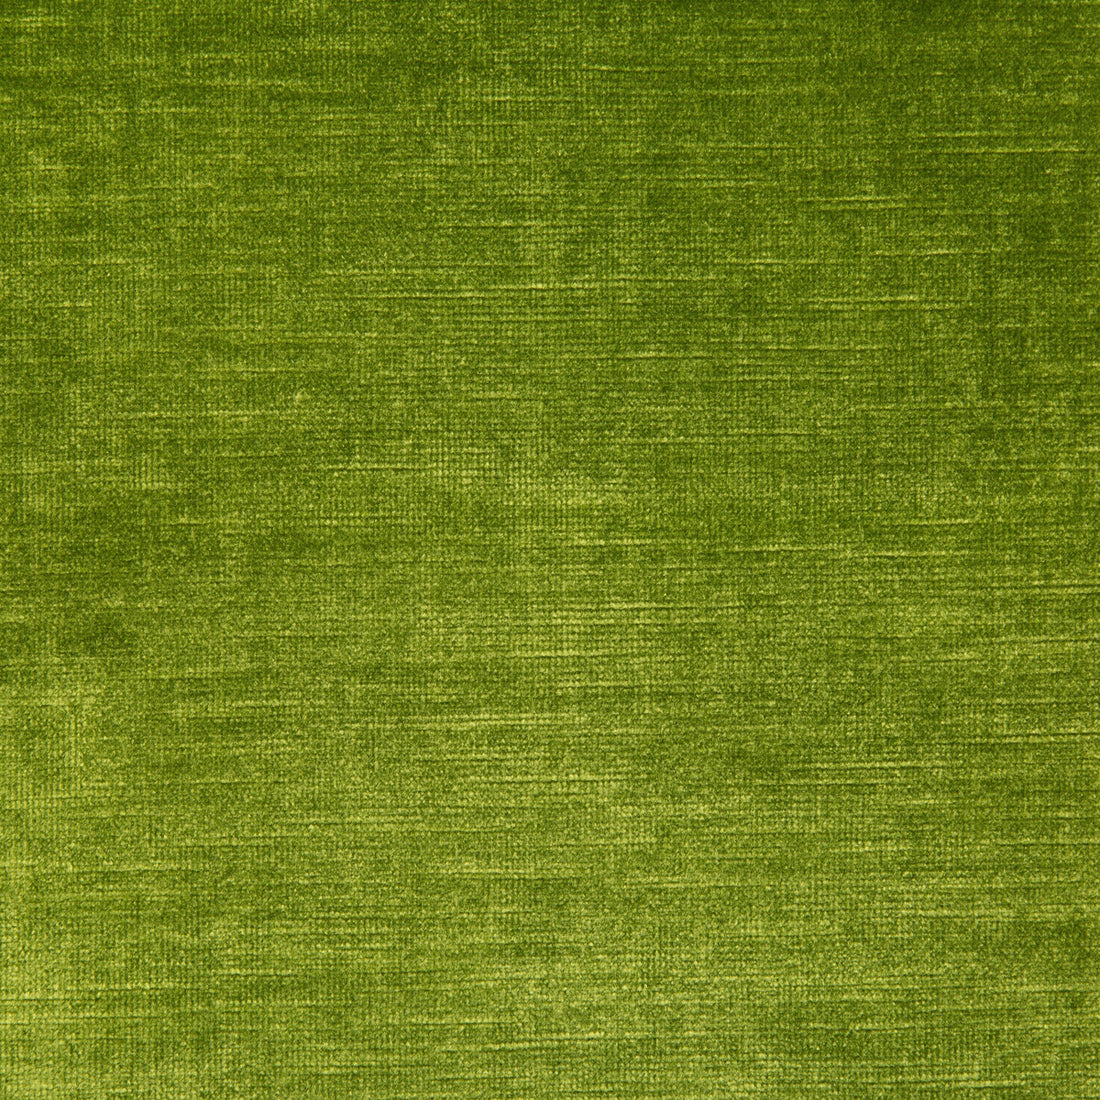 Venetian fabric in grass color - pattern 31326.323.0 - by Kravet Design